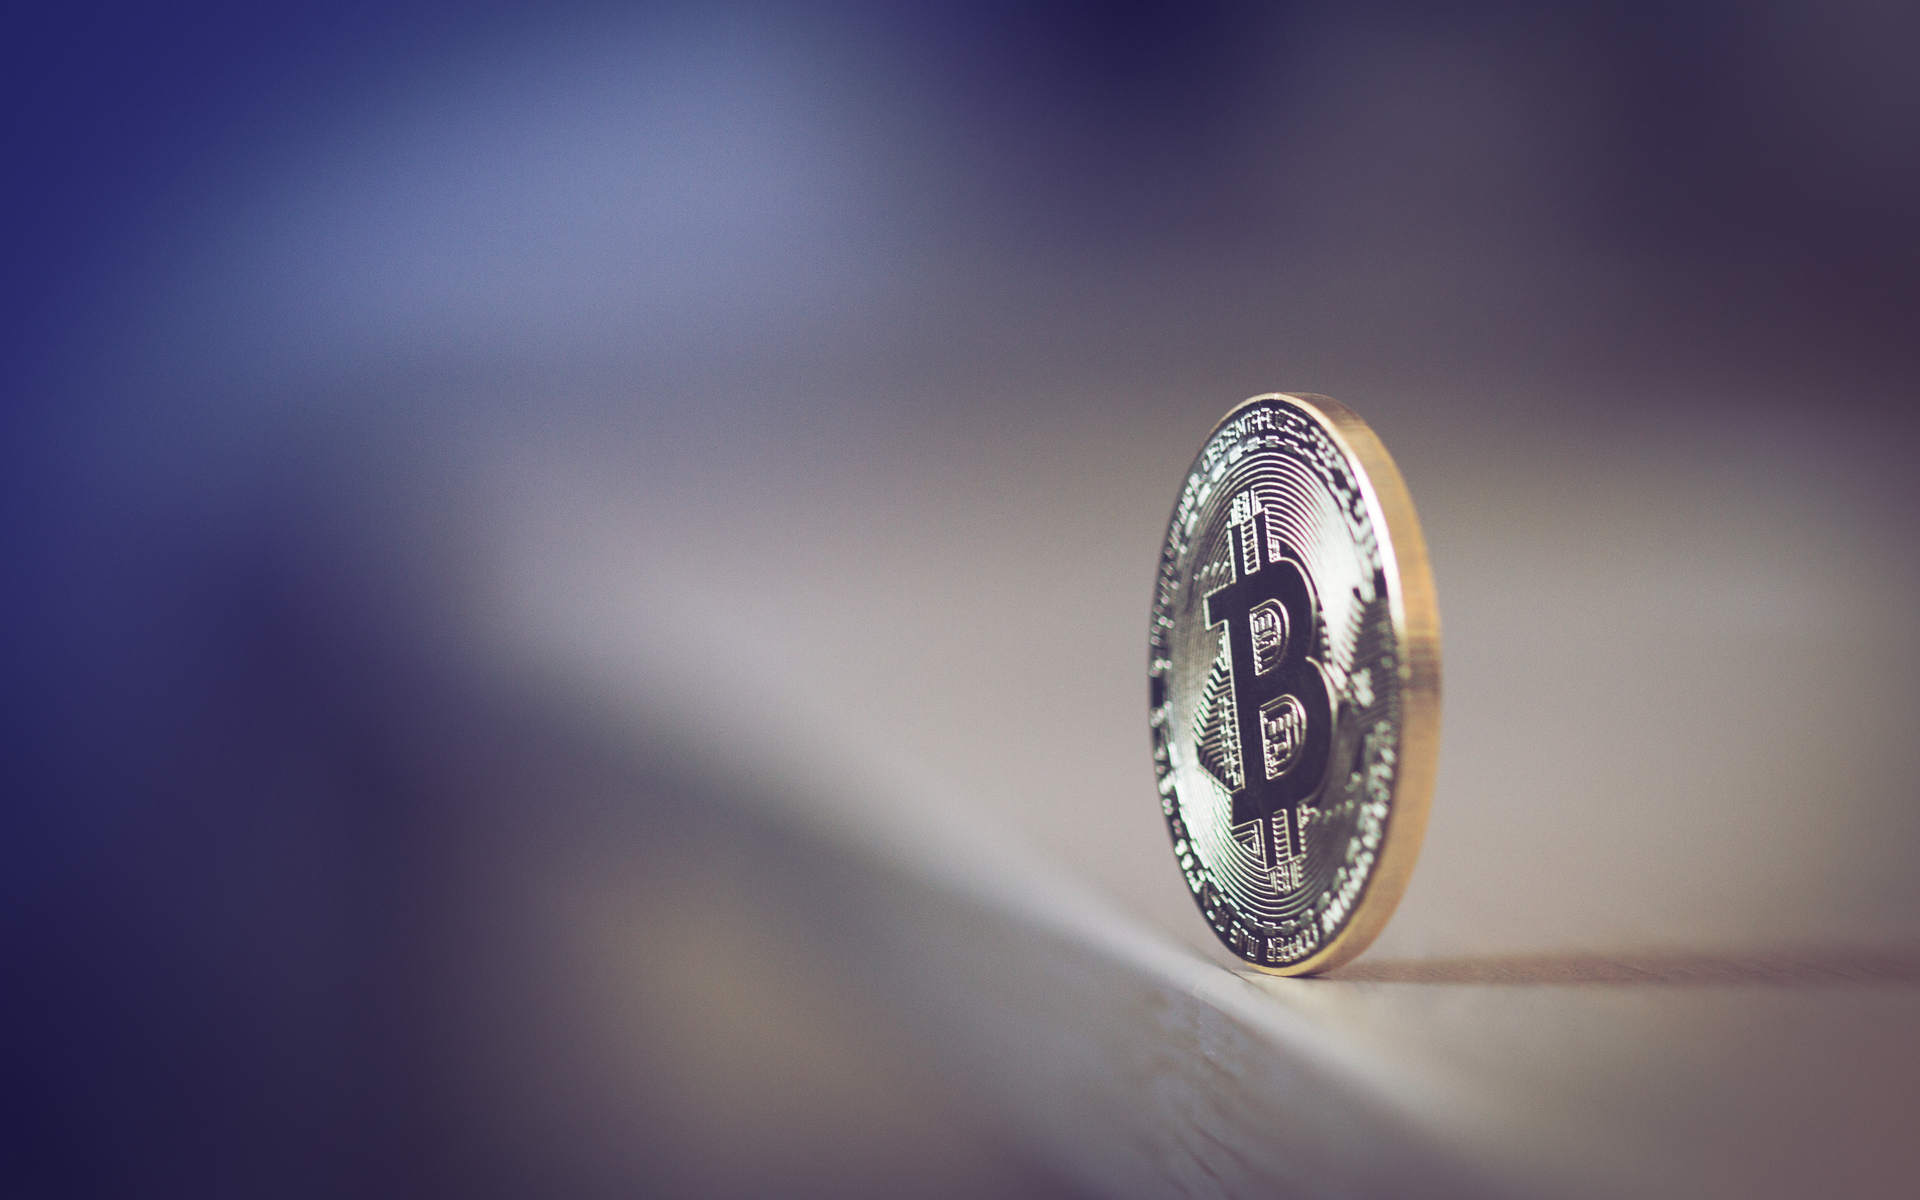 Bitcoin Price ‘Hit Equilibrium,’ Says Mike Novogratz